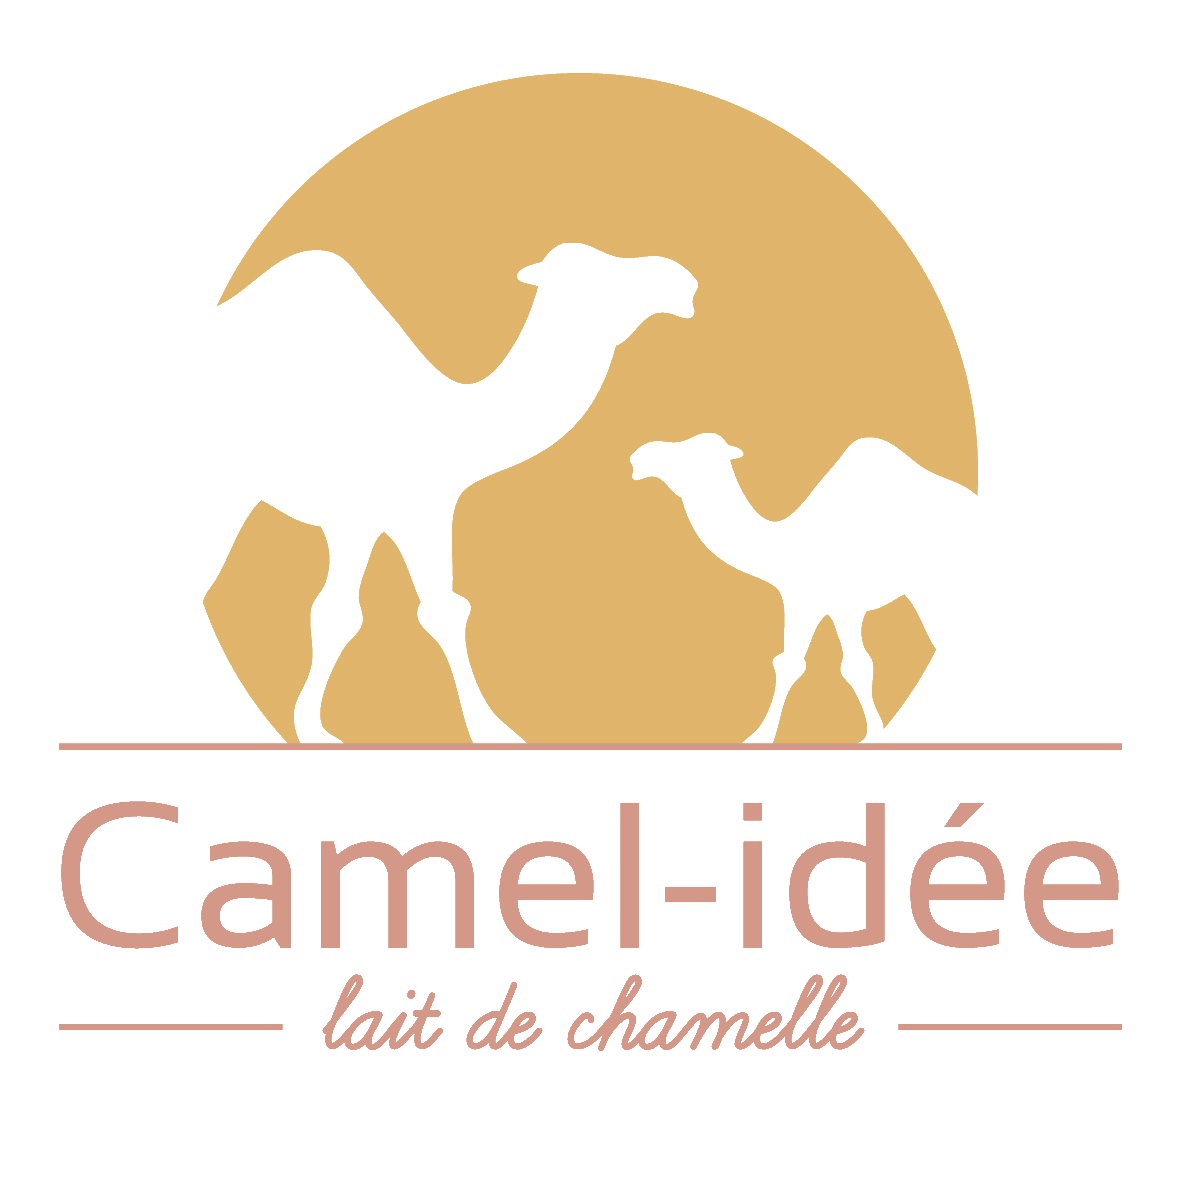 CAMEL-IDEE